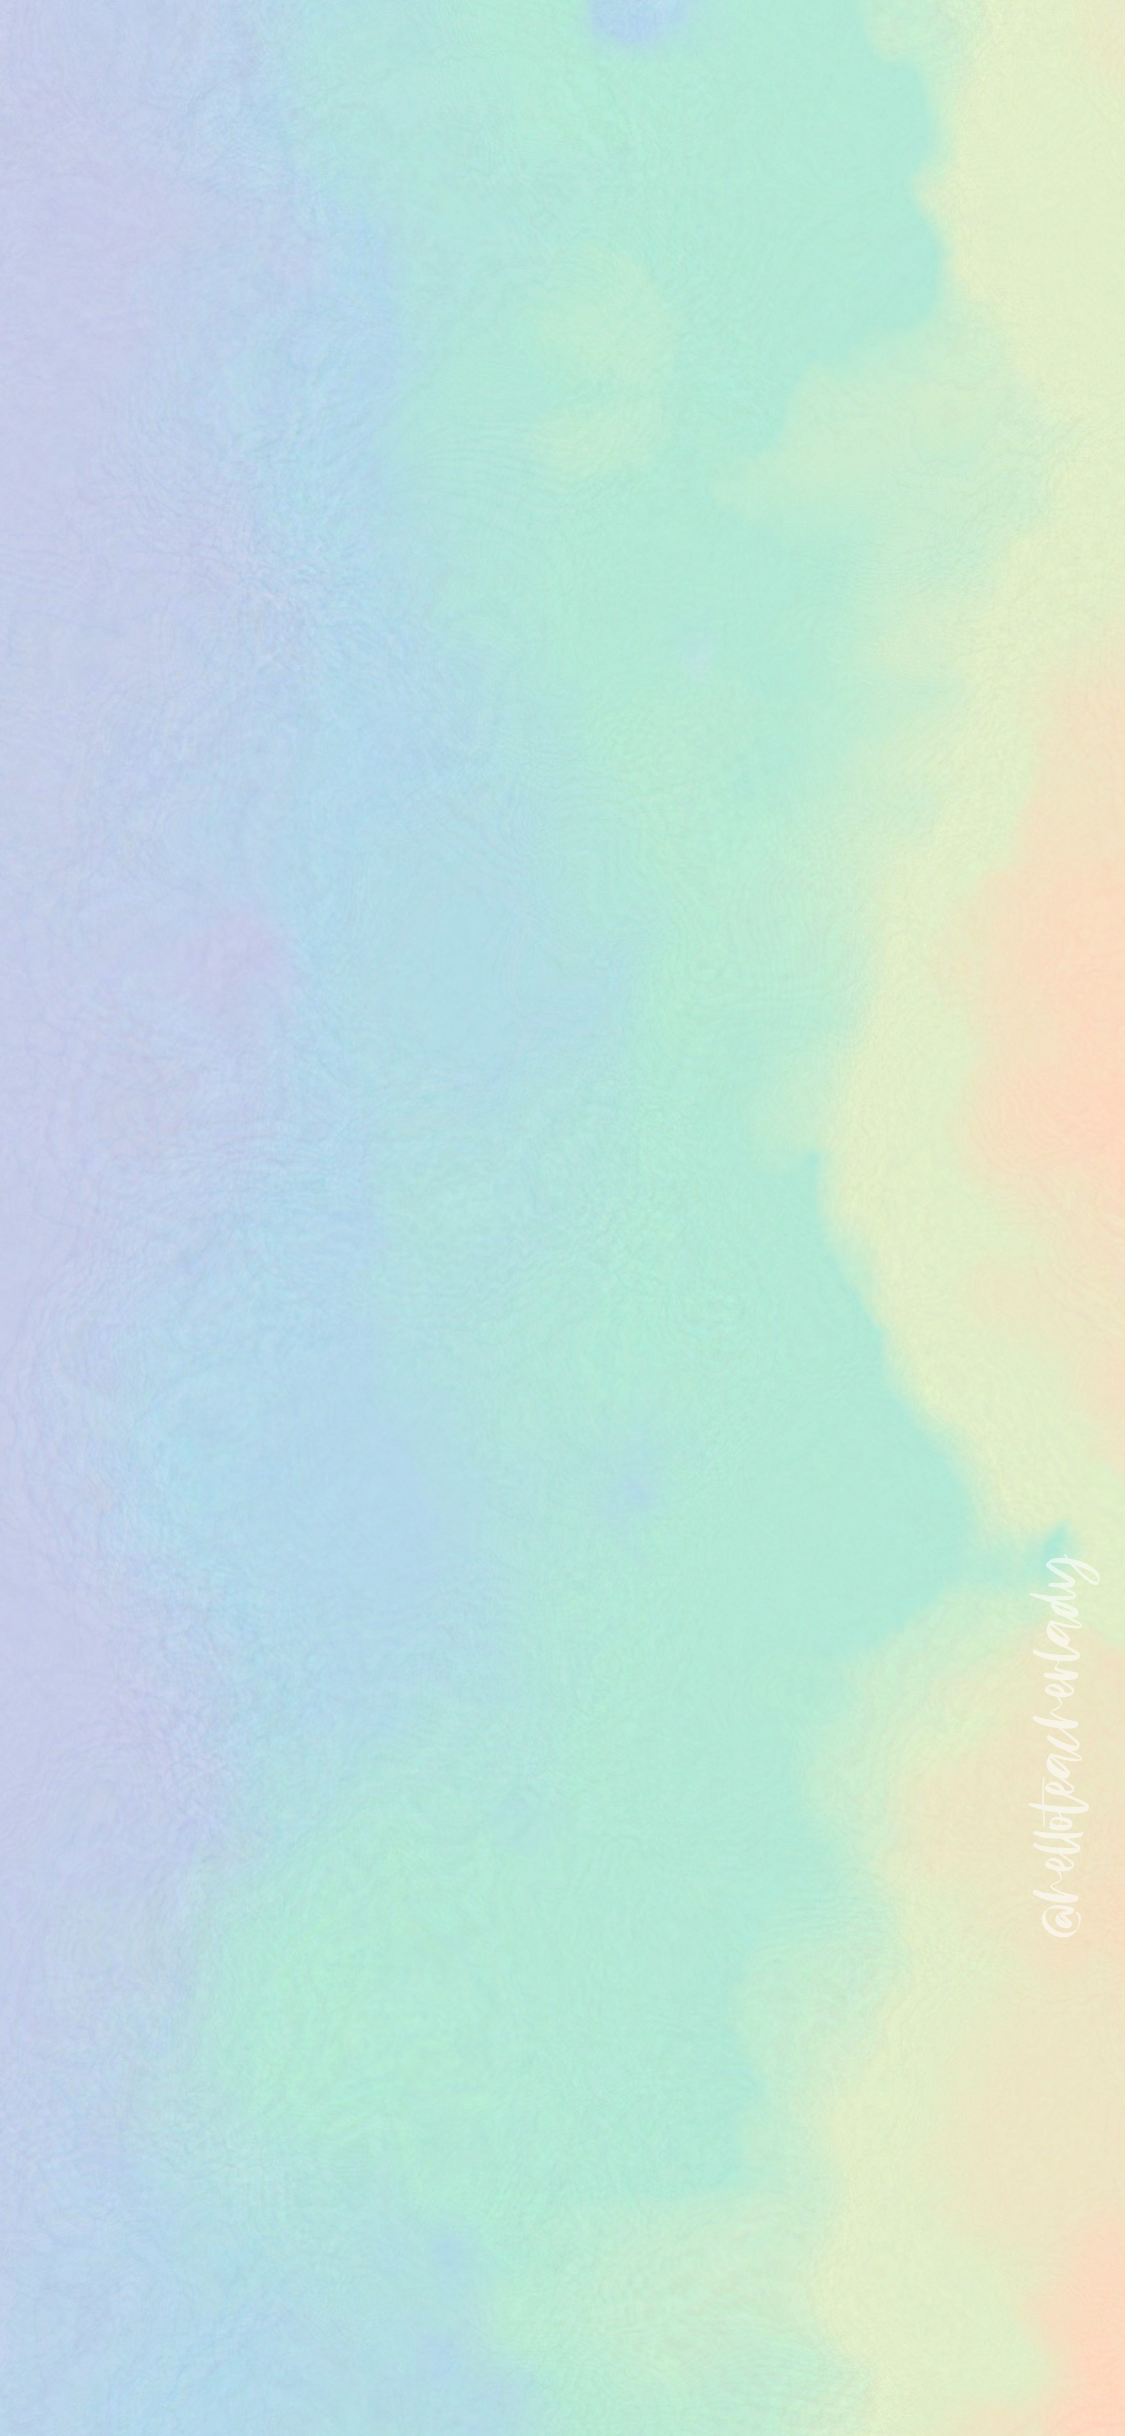 Hình nền mây cầu vòng  Rainbow wallpaper Unicorn wallpaper Rainbow sky